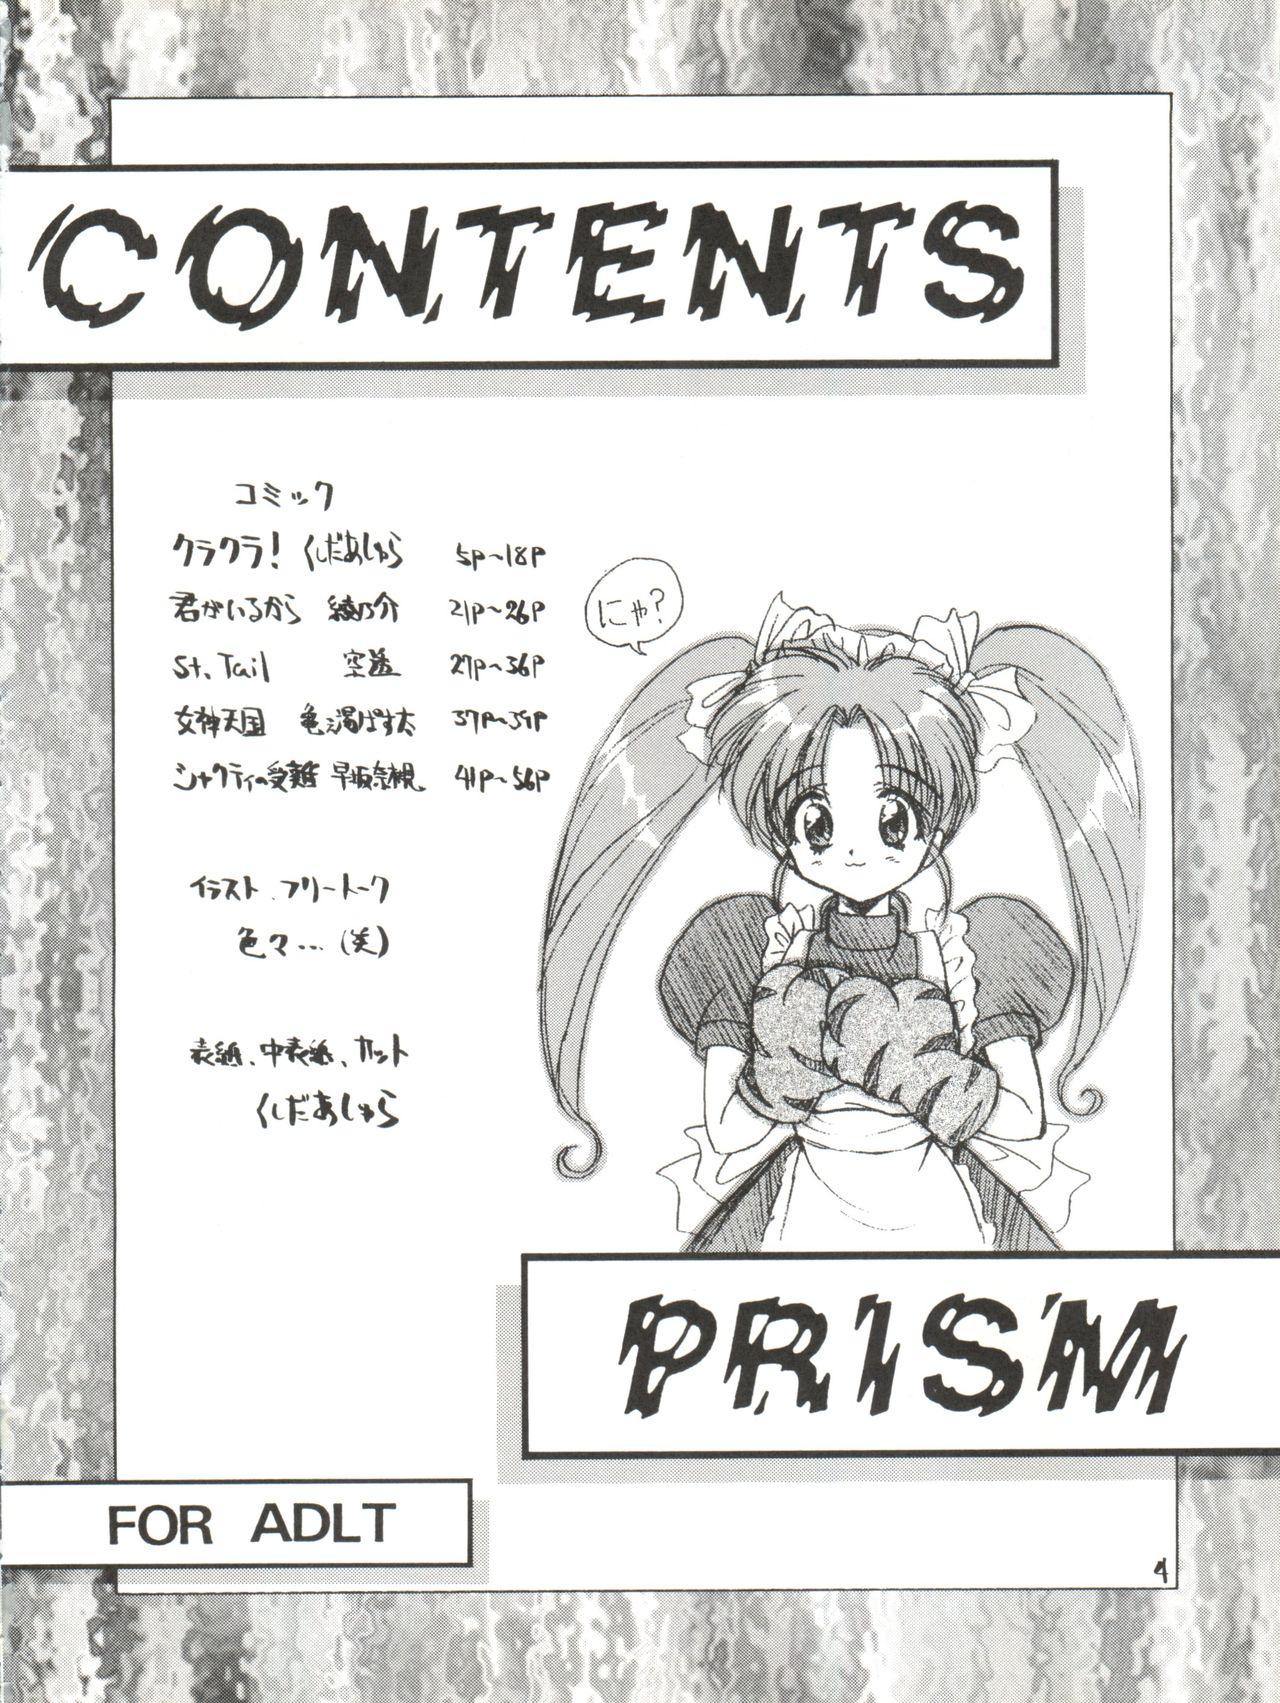 Free Fucking PRISM - Tokimeki memorial Saint tail Wedding peach Victory gundam Megami paradise From - Page 4